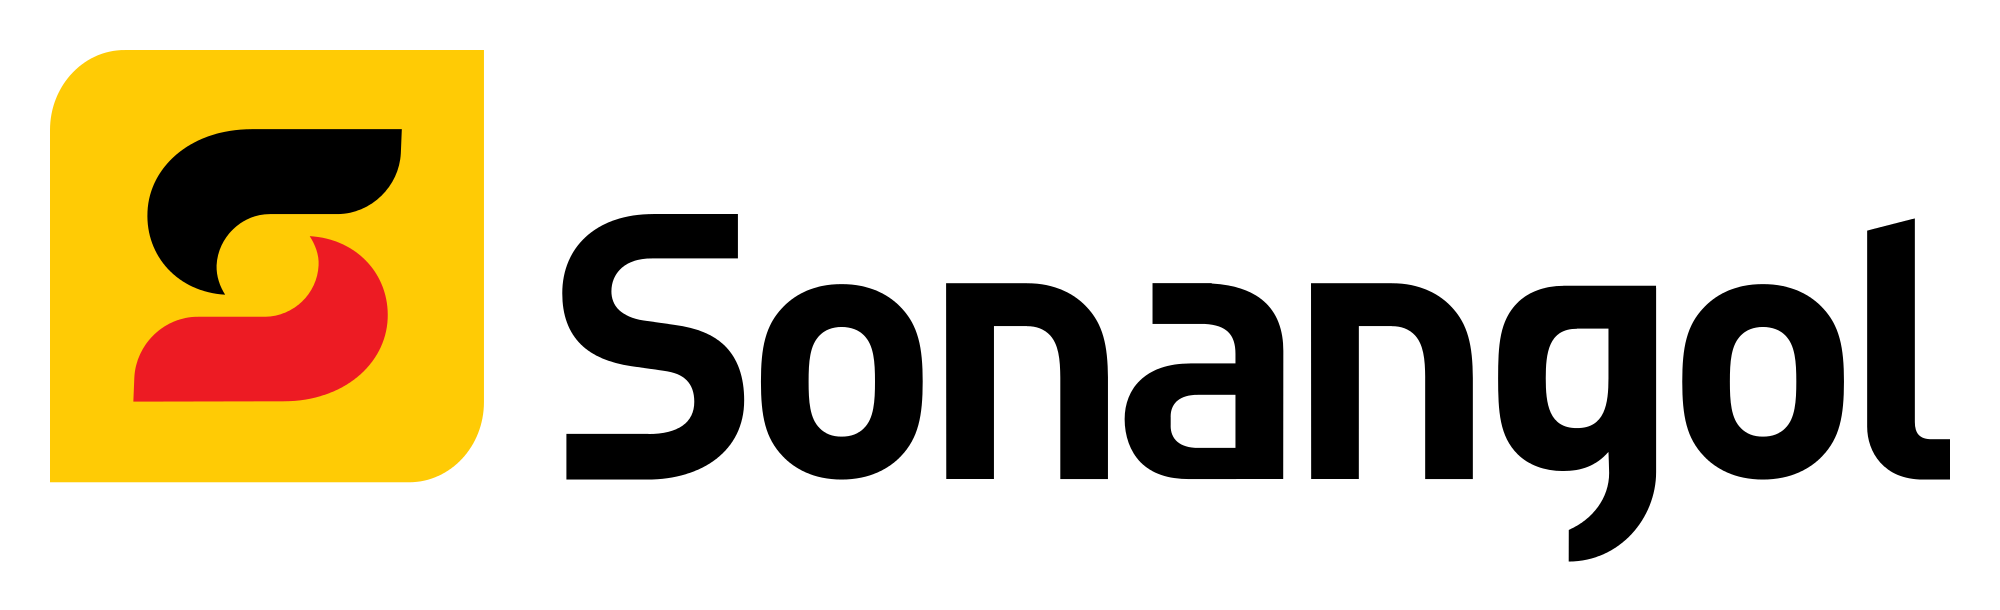 3 Sonangol Logo Wikimedia